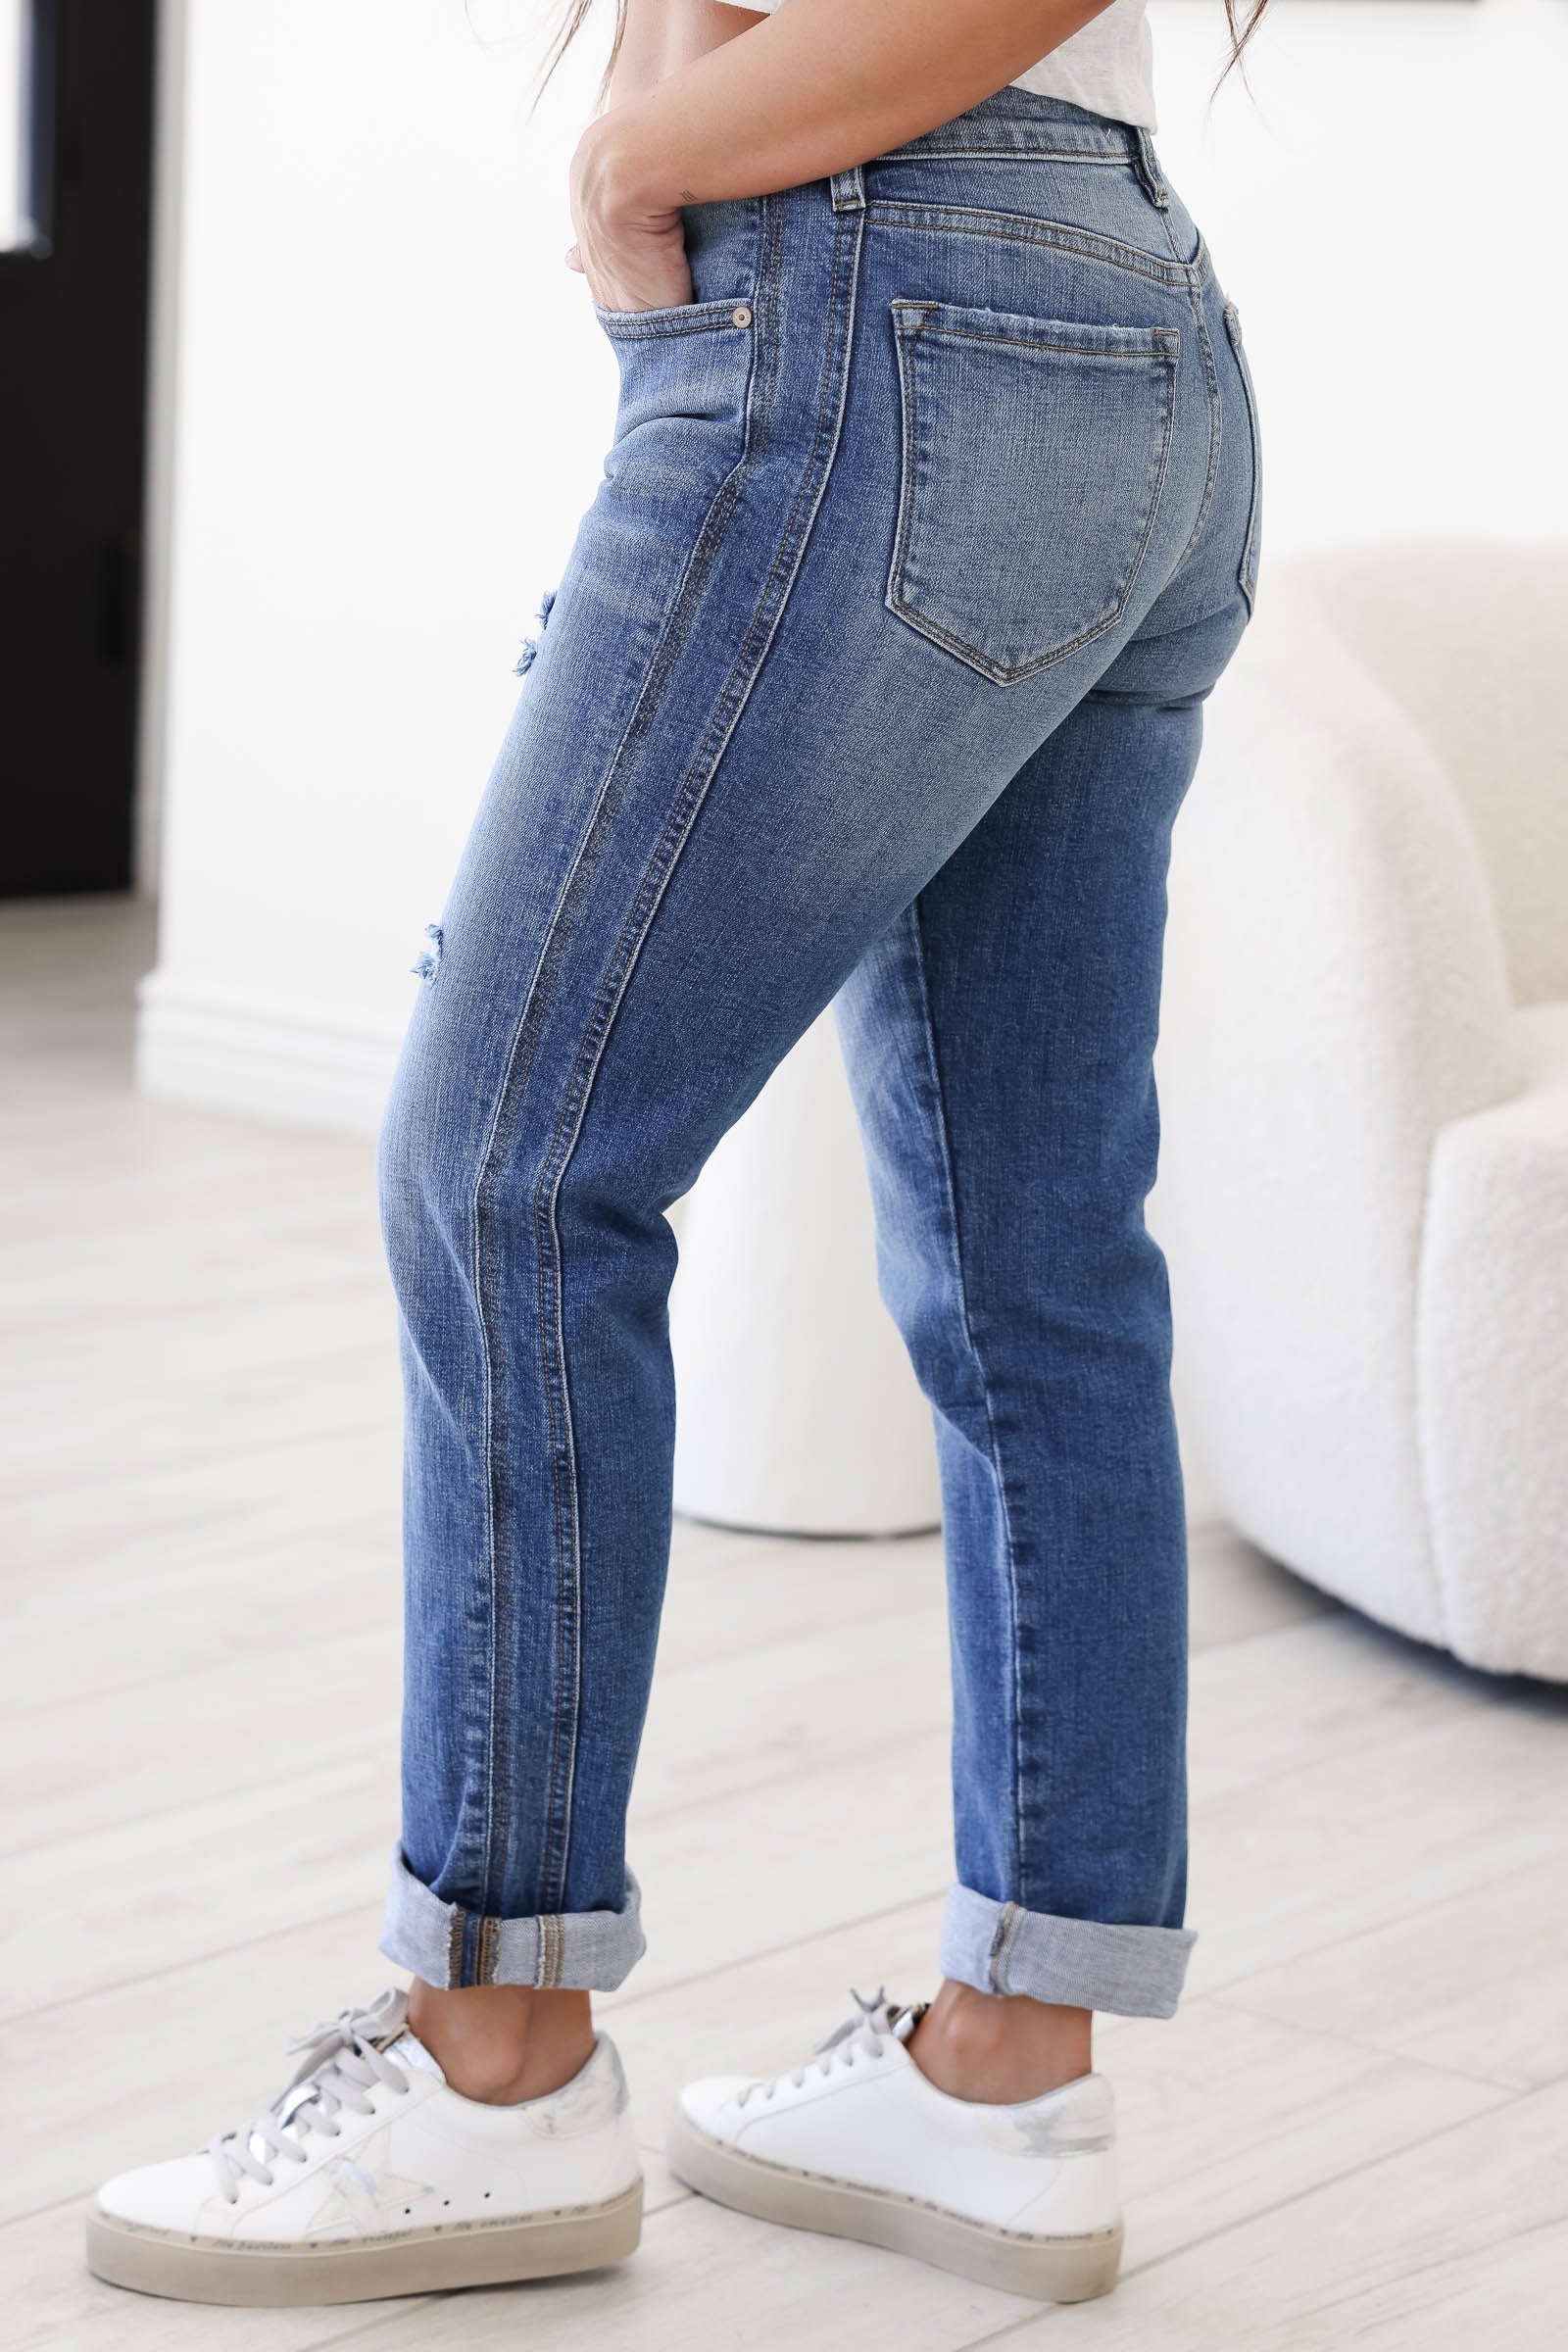 KANCAN Jade Midrise Boyfriend Jeans - Medium Wash, Closet Candy, 1